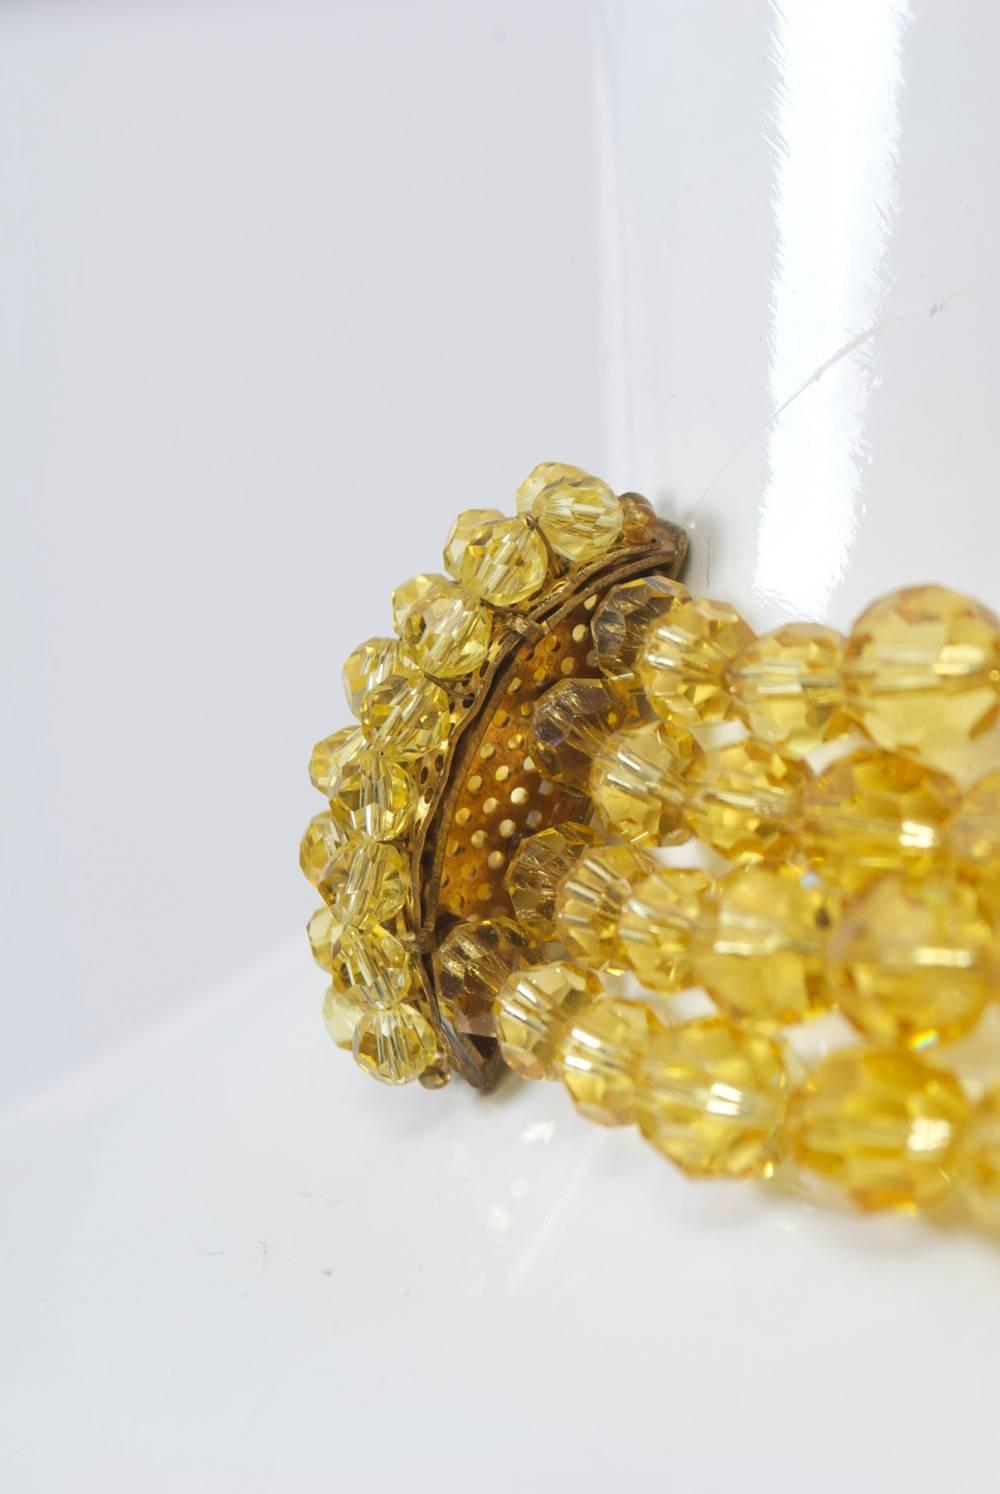 yellow crystal jewelry